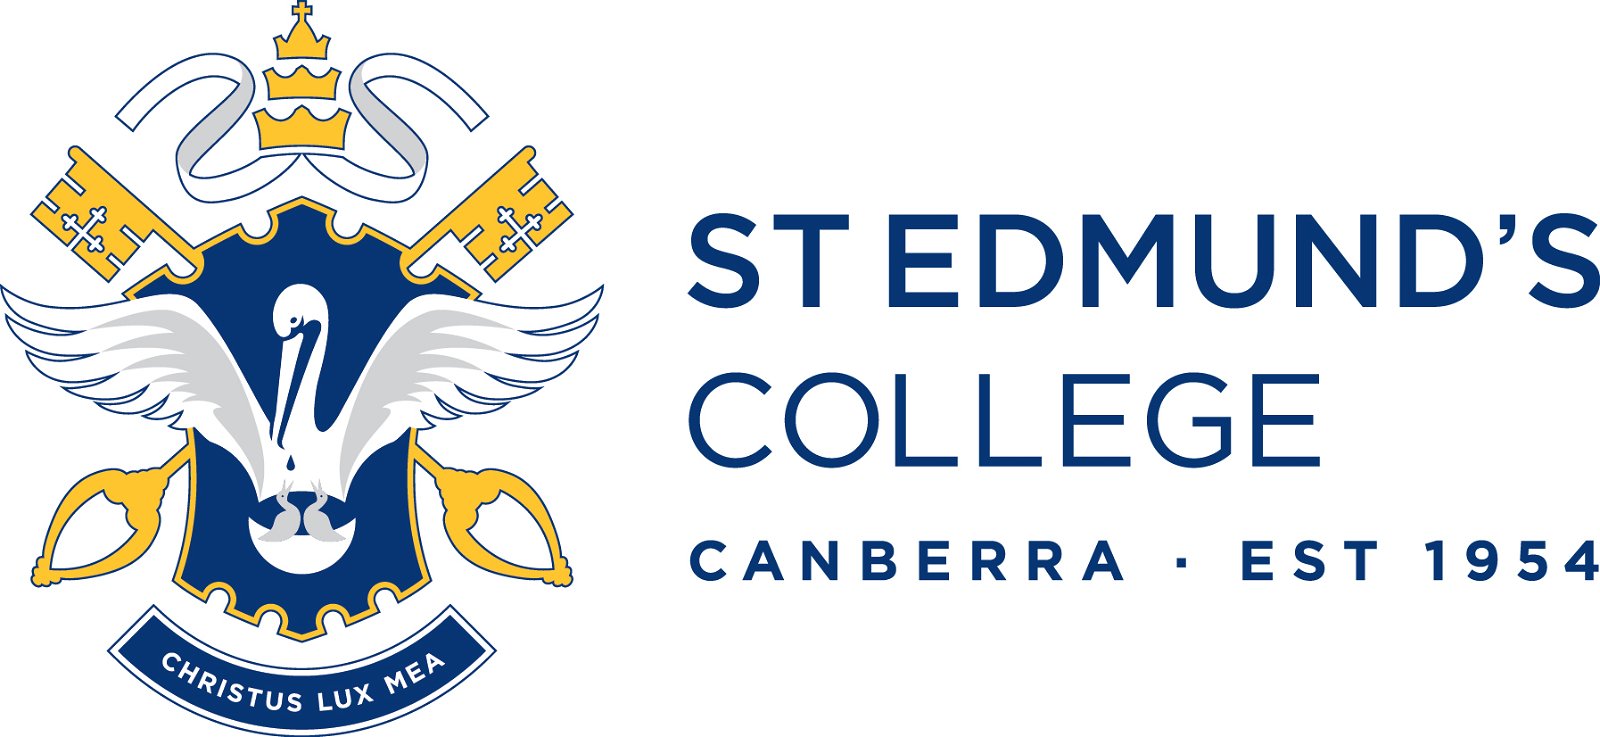 St Edmund's College Canberra